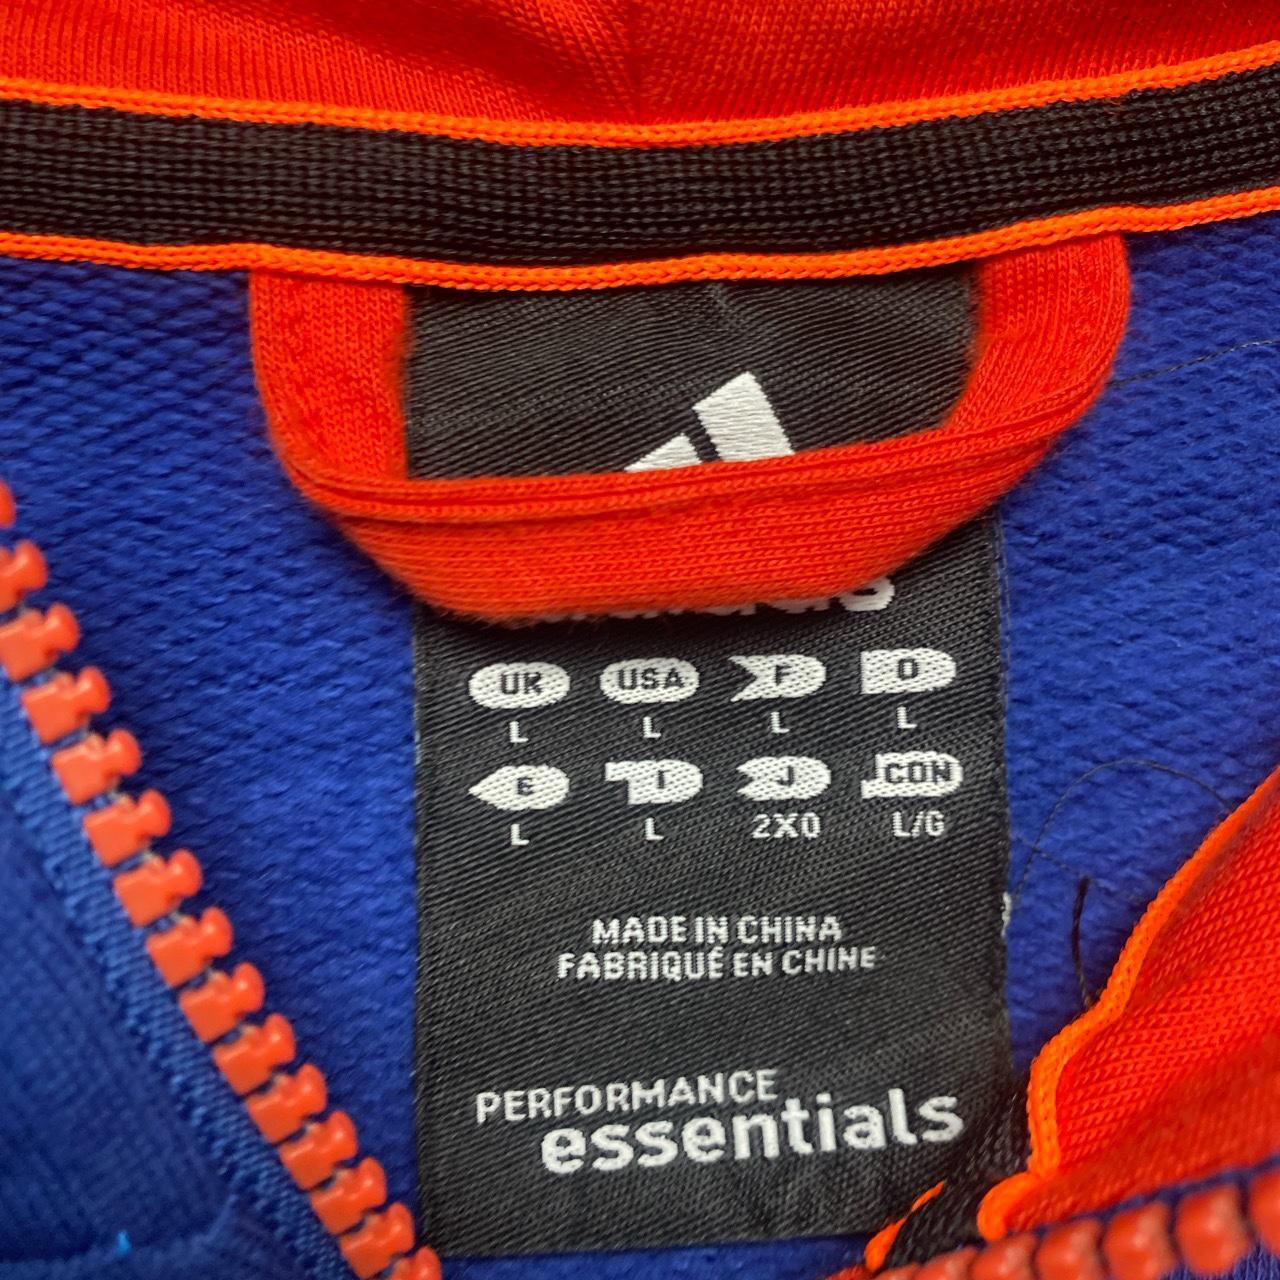 Adidas Performance Essentials Three Stripe Blue Red and Orange Hoodie